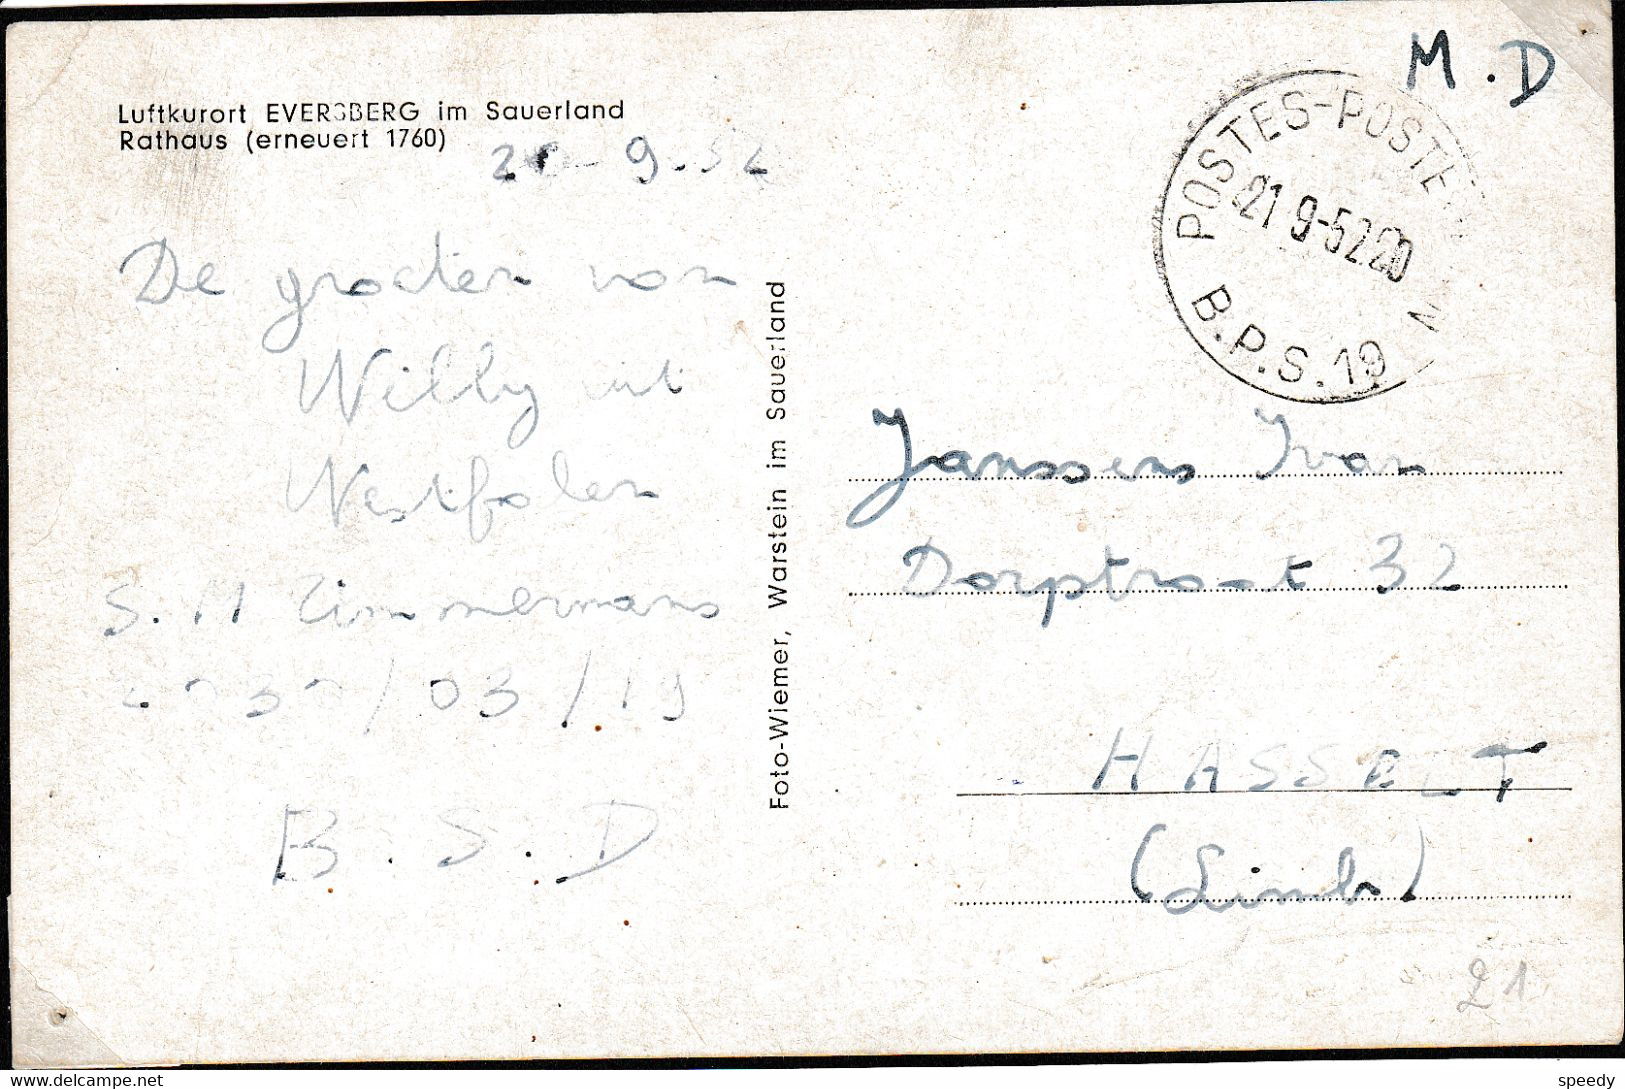 BZLGIË : MANEUVERS 1952 (HOLDFAST) ZK (Eversberg) "MD"  " B. P. S. 19 / 21.5.52" (adres : 2030/03/19) - Army